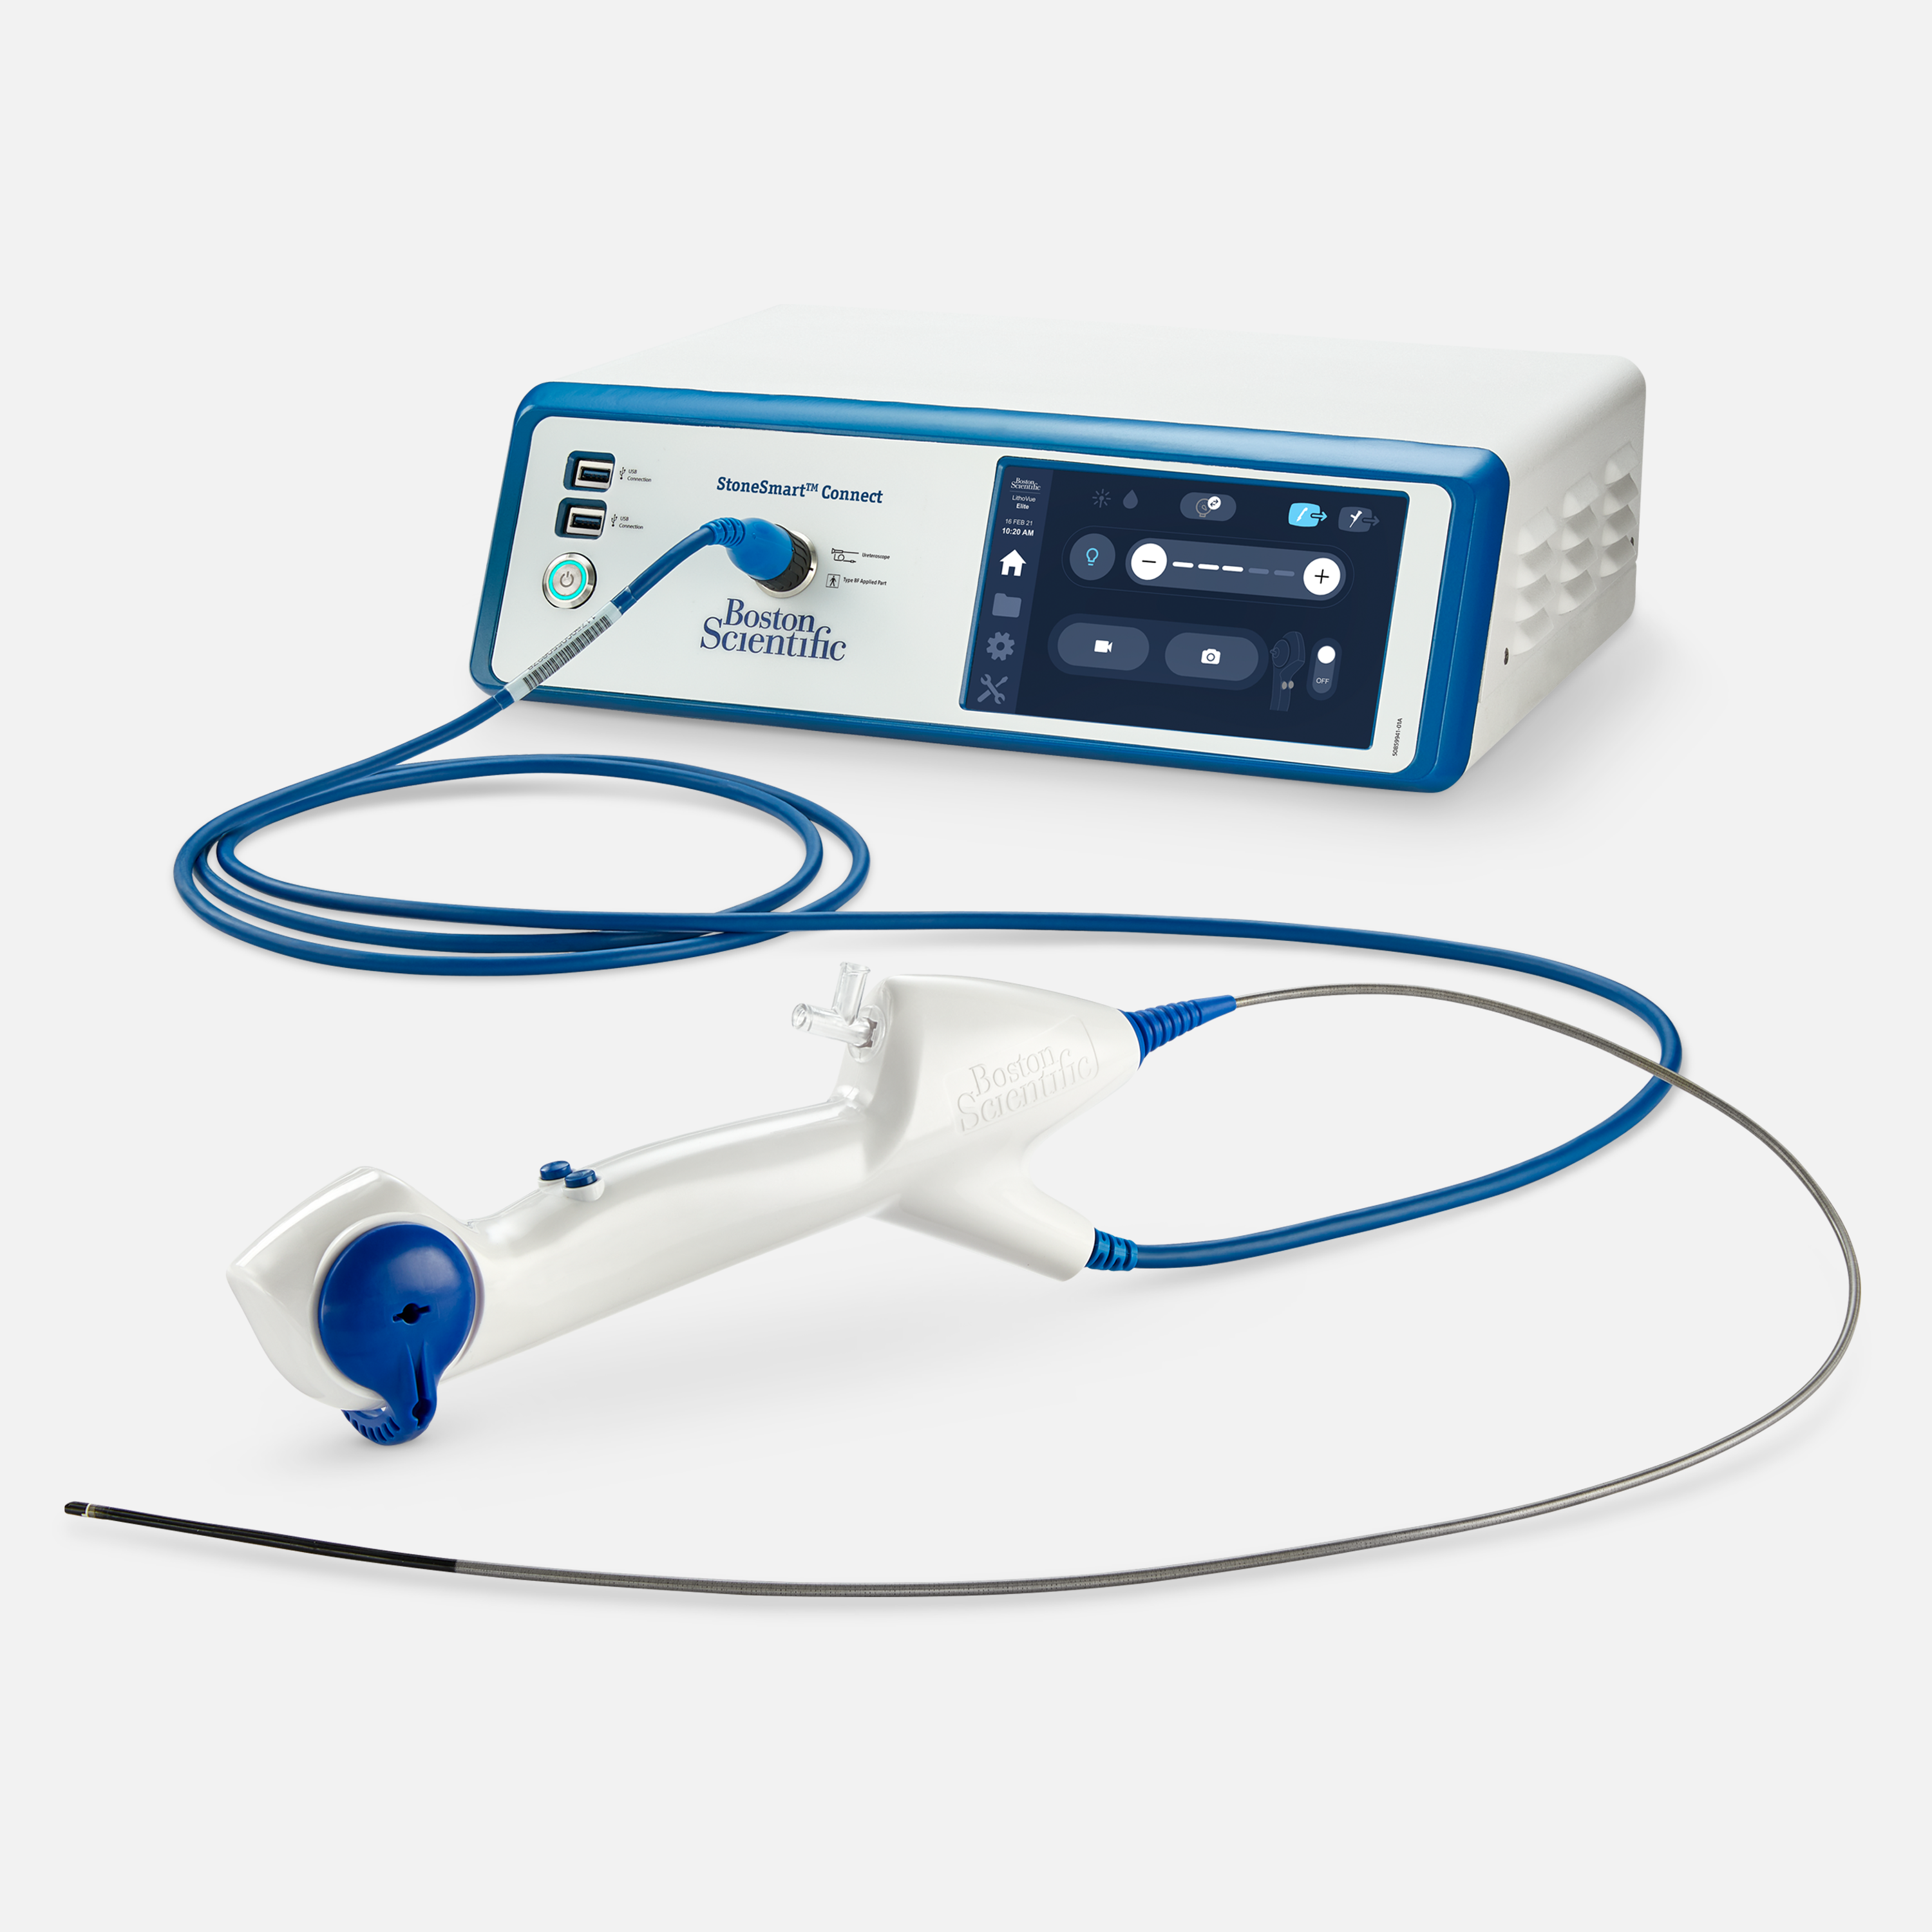 Boston Scientific LithoVue Elite Single-Use Digital Flexible Ureteroscope.